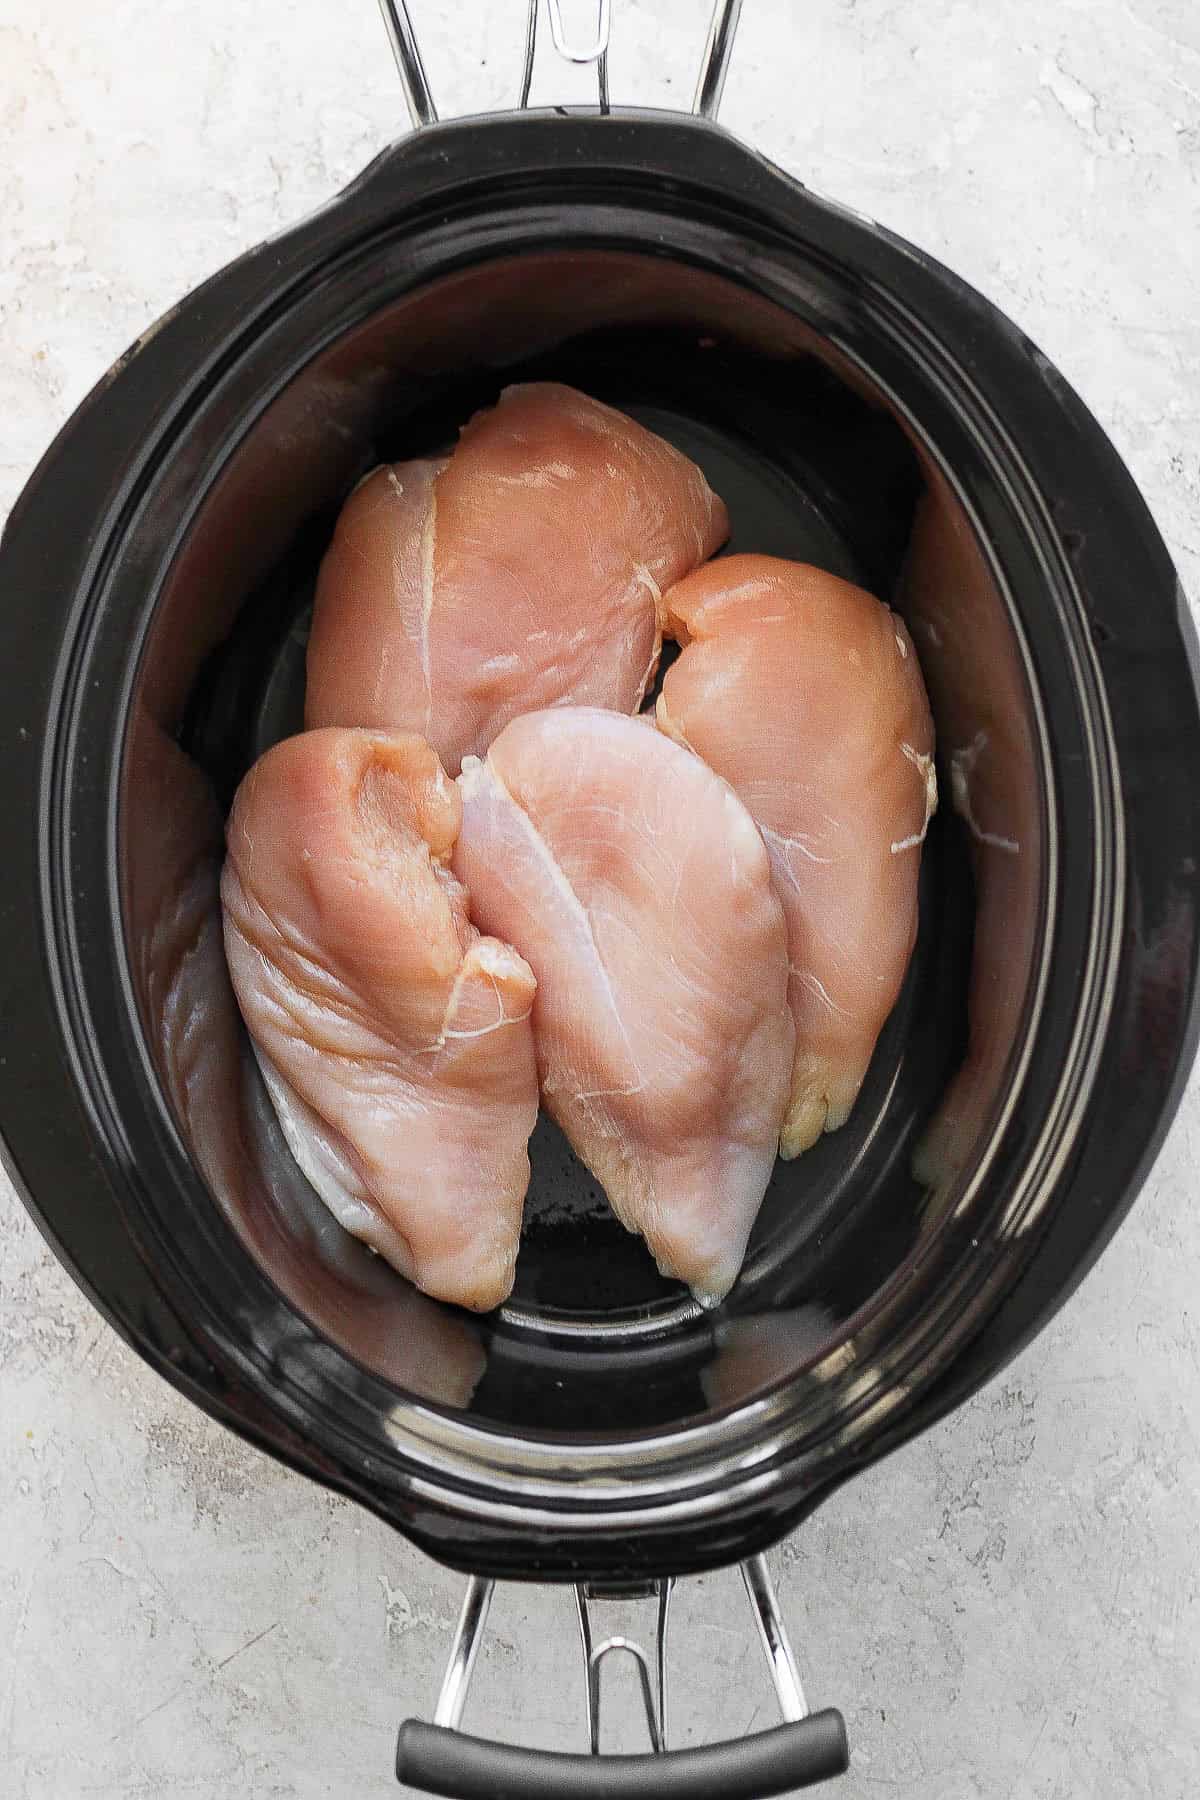 Raw chicken added to a crockpot